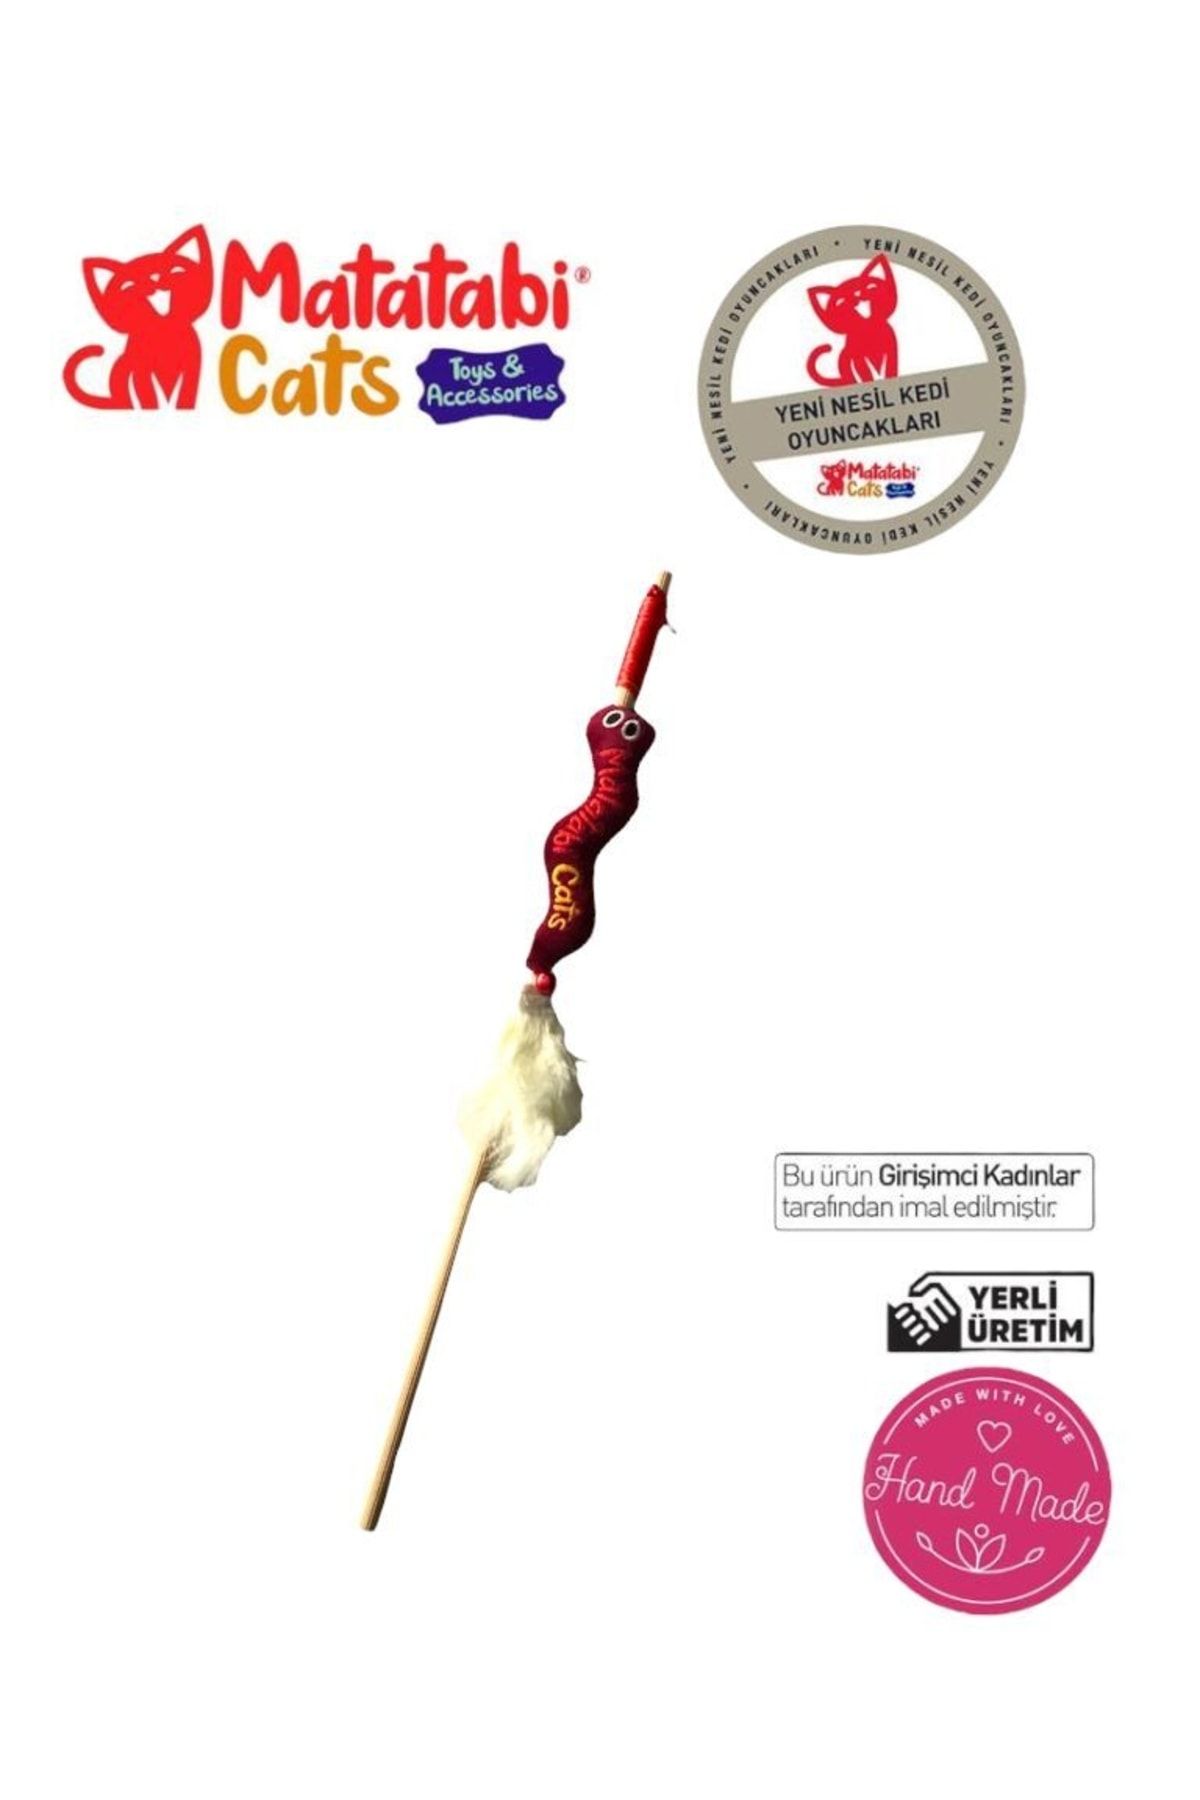 MATATABİ CATS Wormy Wooden Handled Cat Fishing Rod with Plush Cat Toy -  Matatabi Content - Trendyol